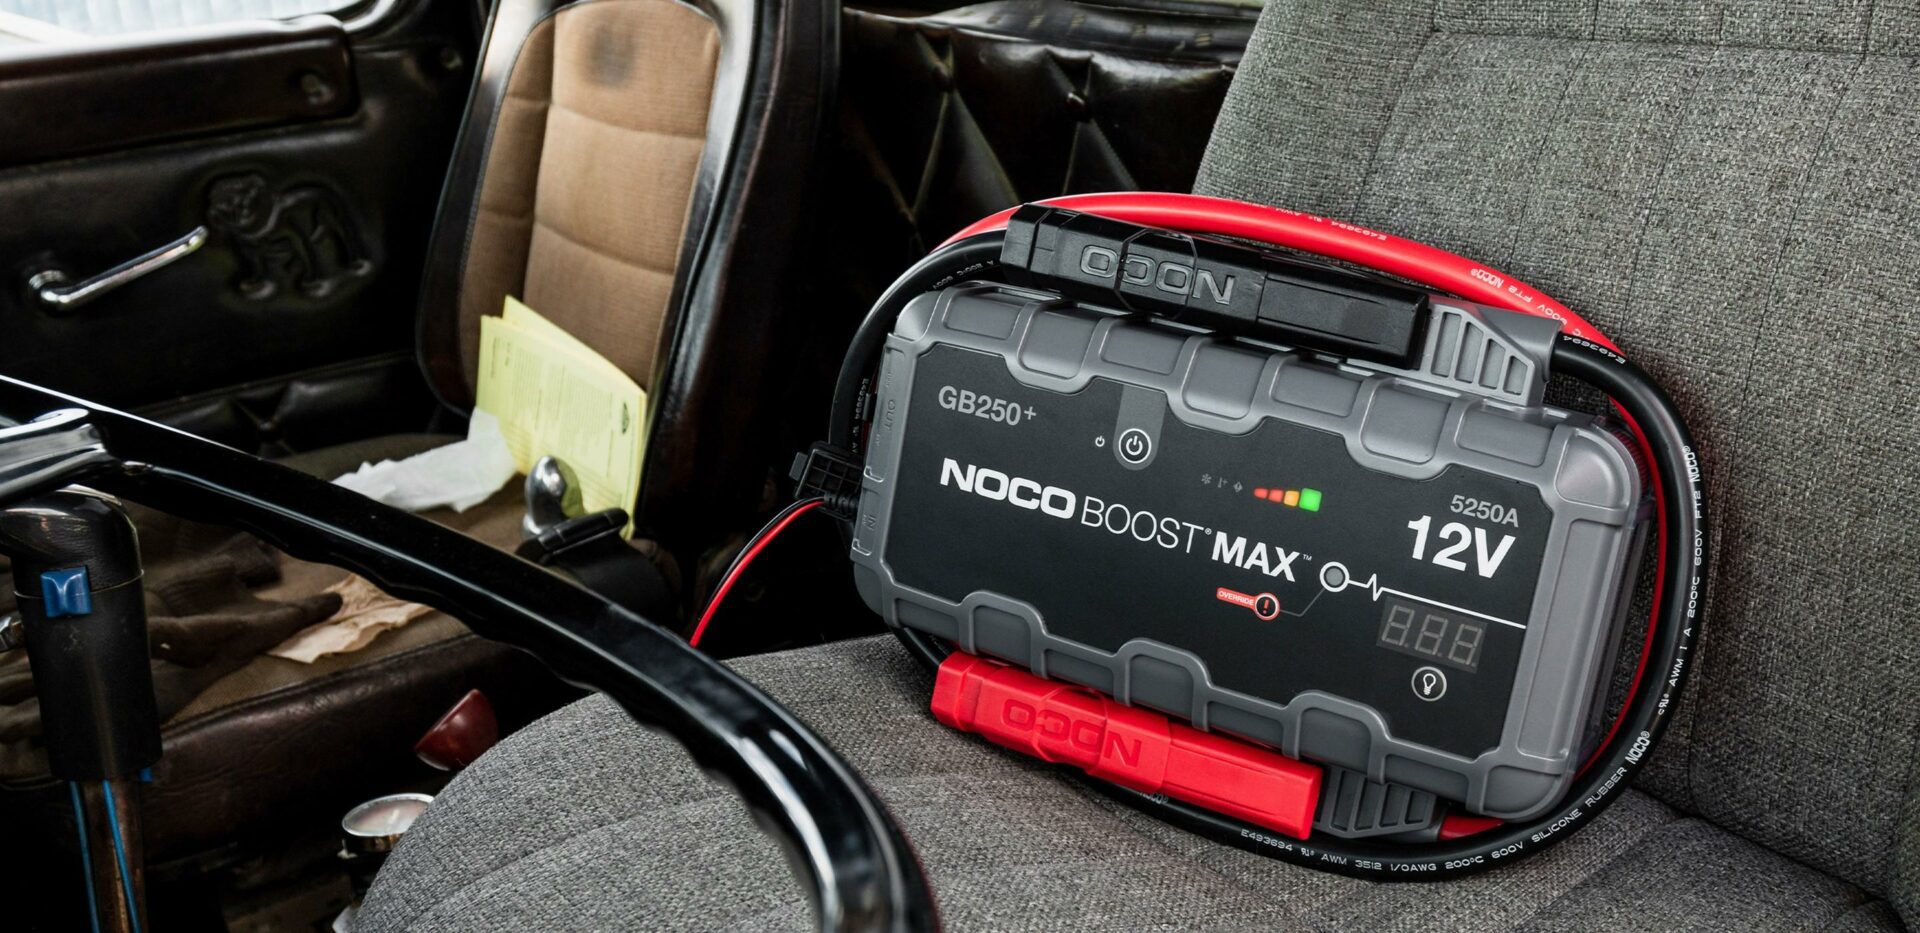 NOCO Boost Max GB250+ 12V 5250 Amp UltraSafe Lithium Jump Starter